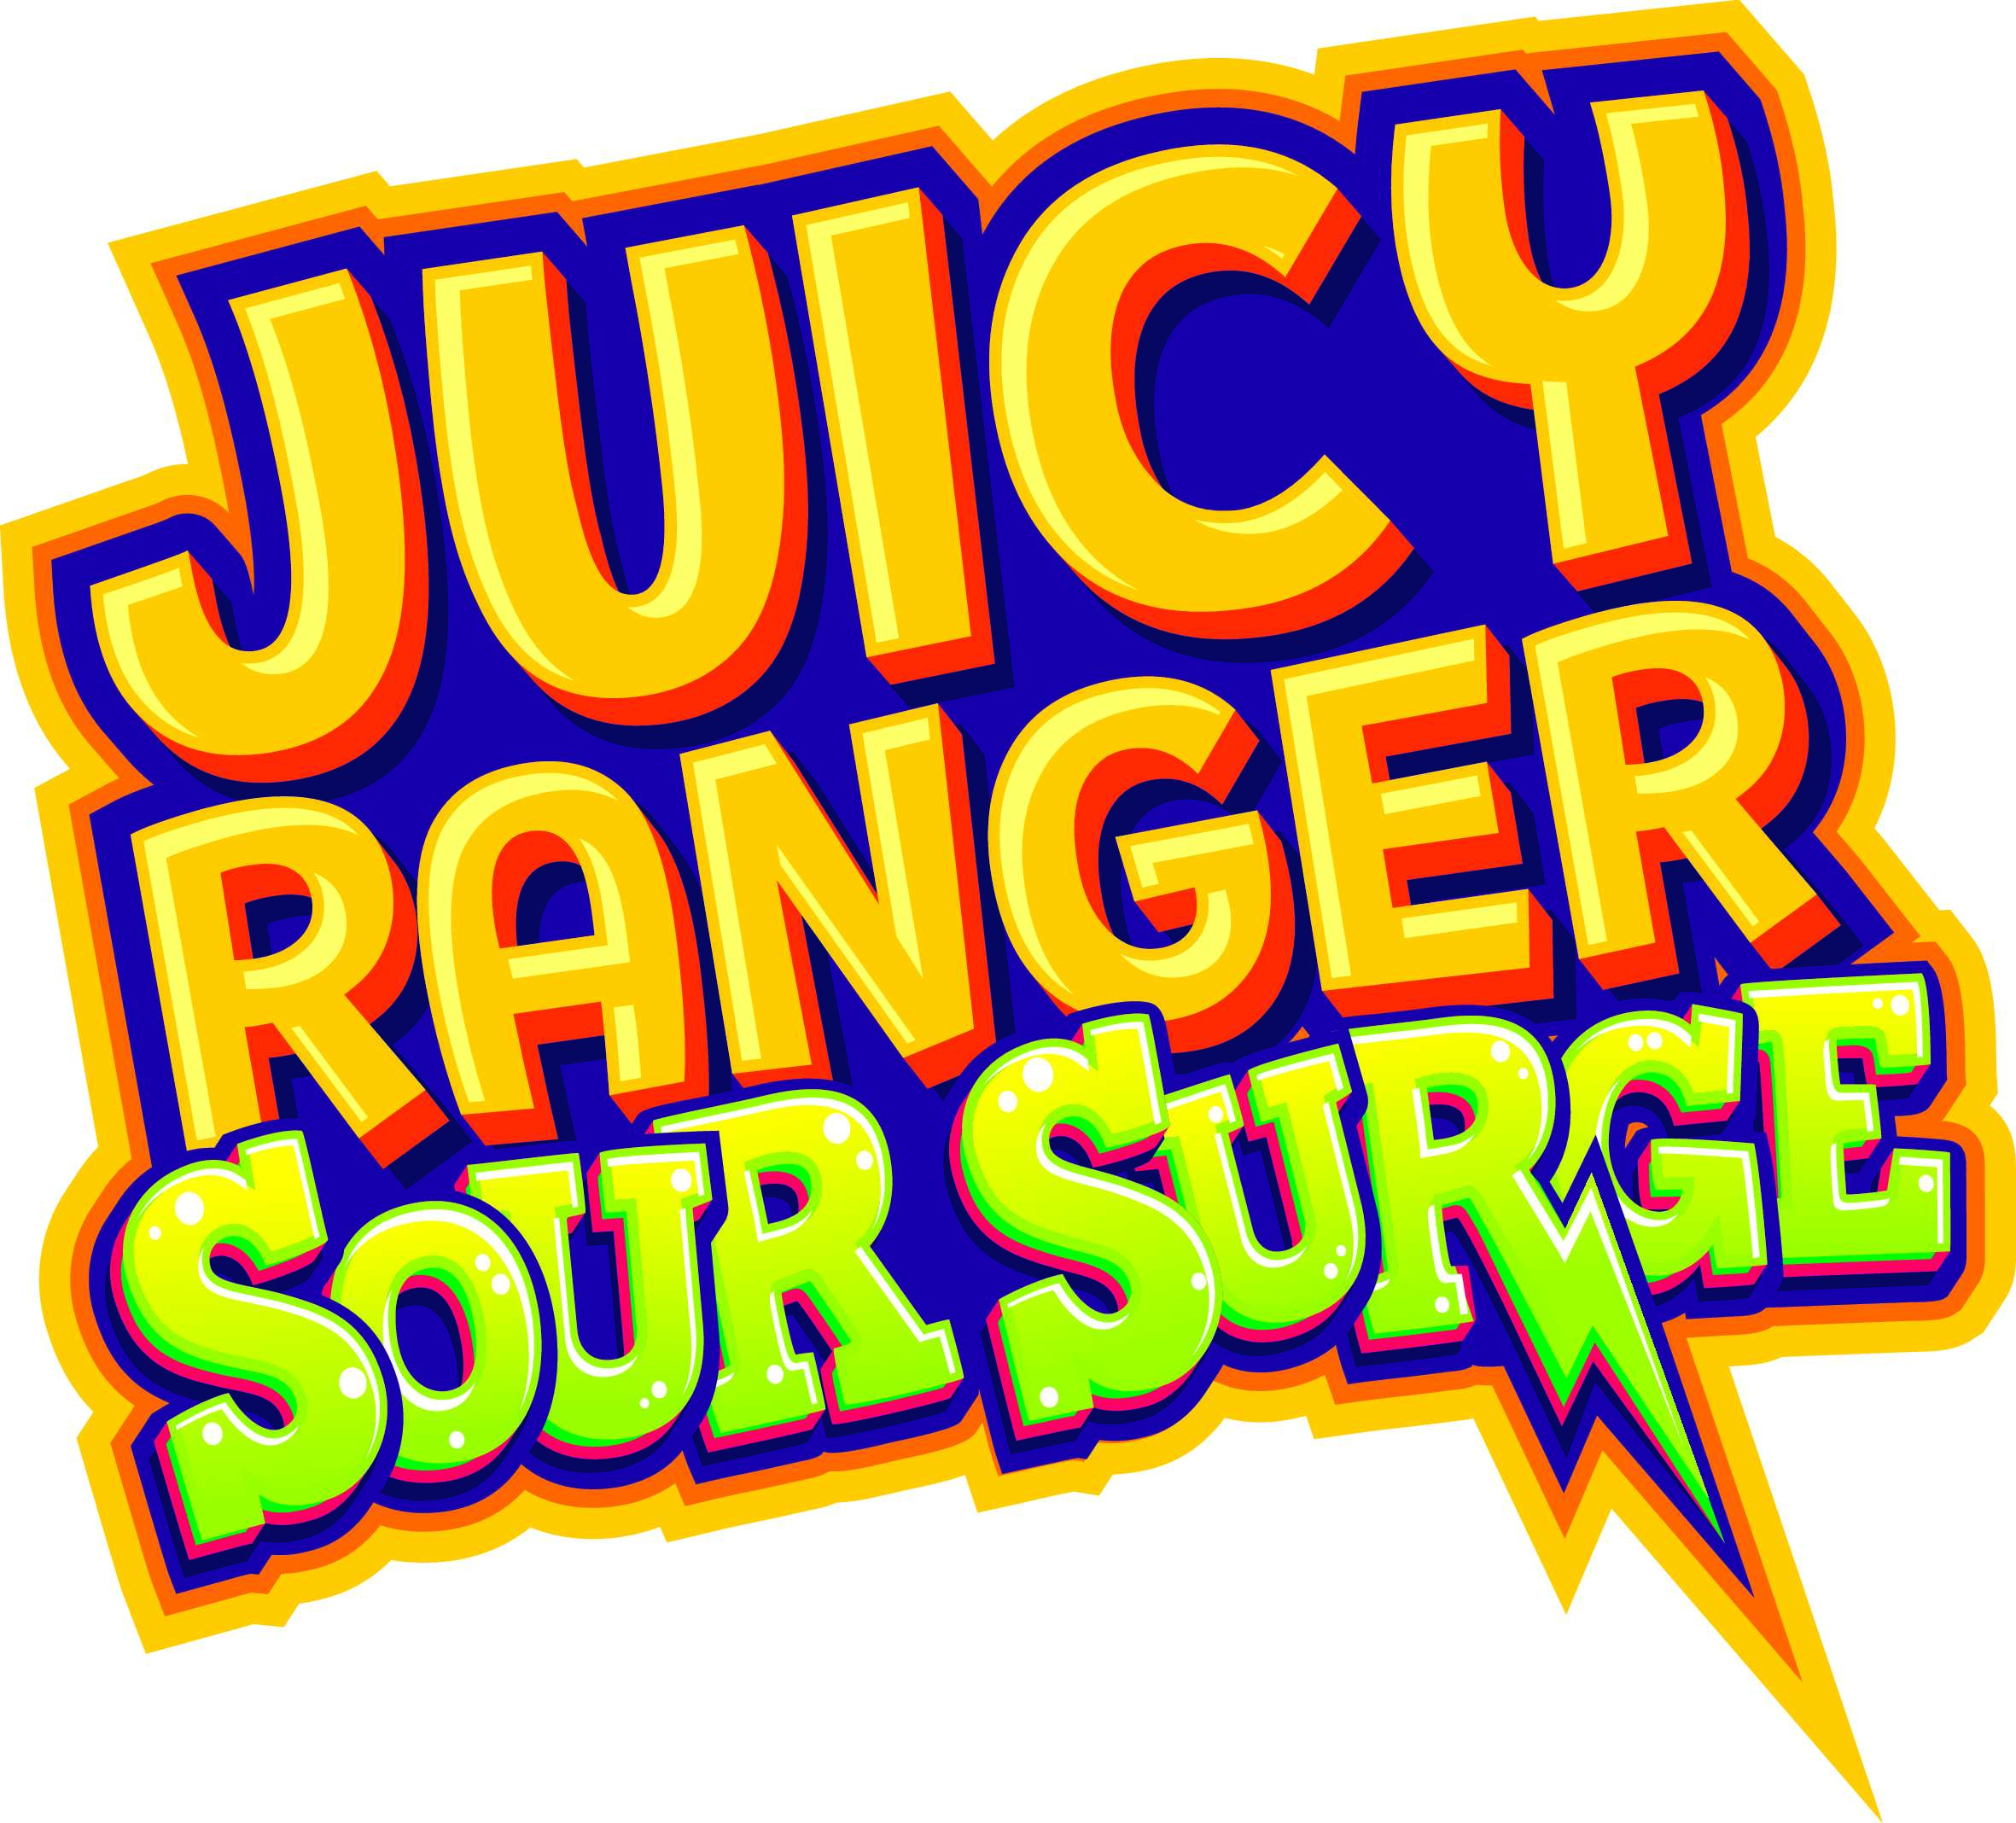 Juicy Ranger Sour